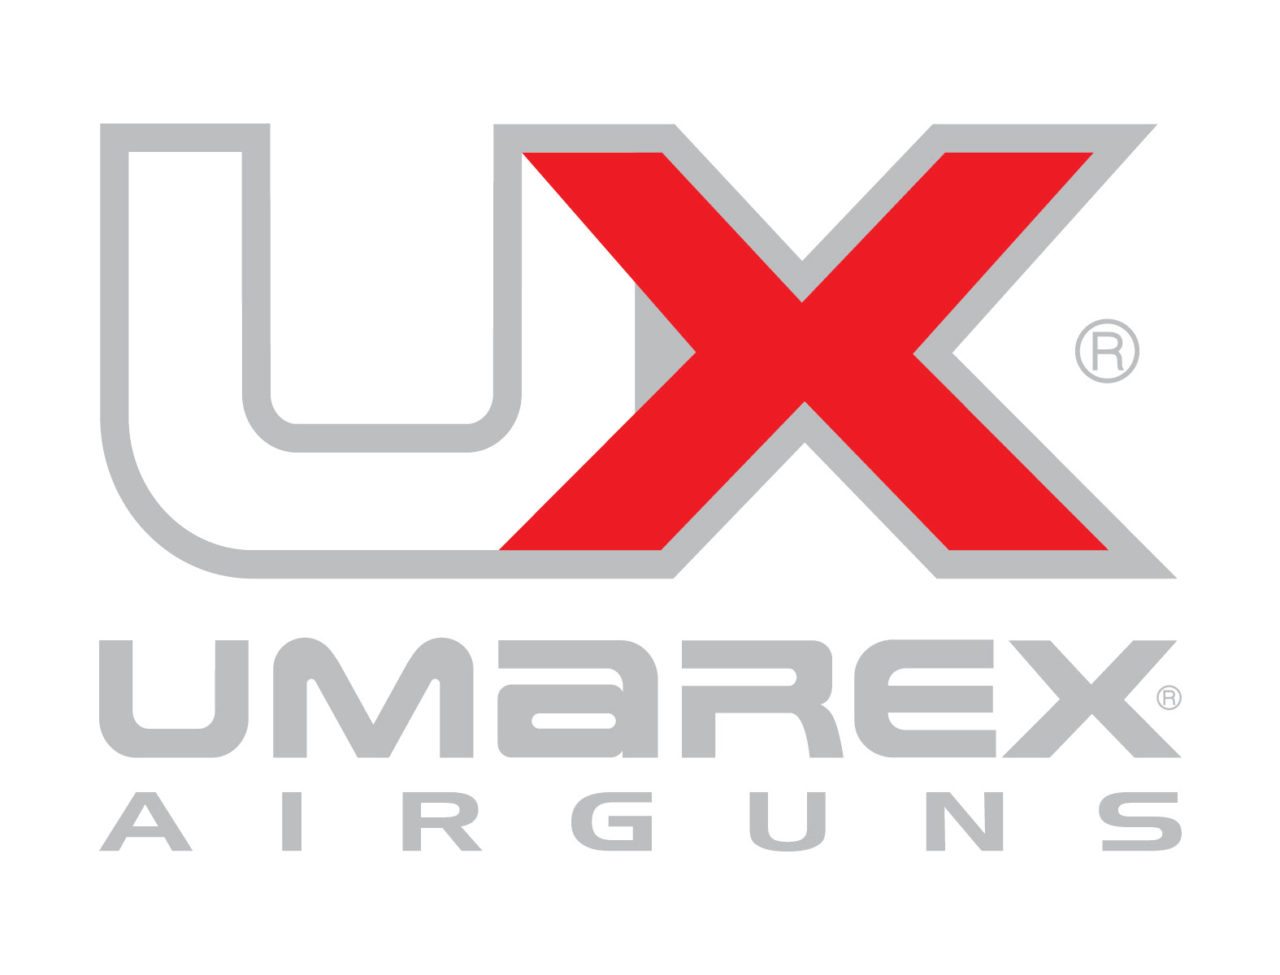 Umarex USA to Exhibit T4E Training Products at ILEETA Conference